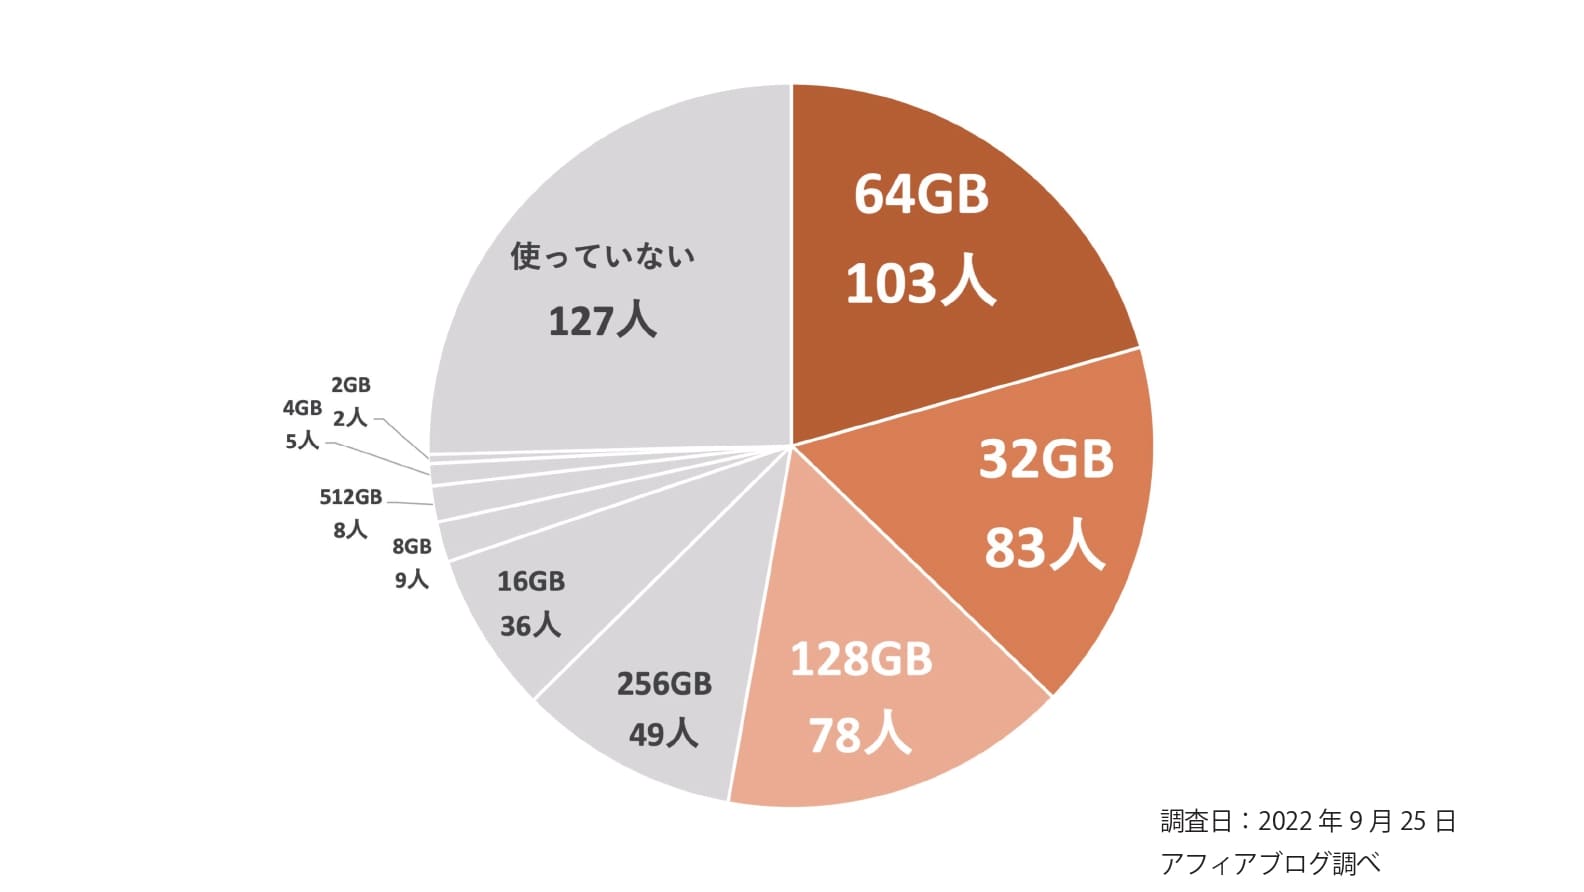 MicroSD 円グラフ